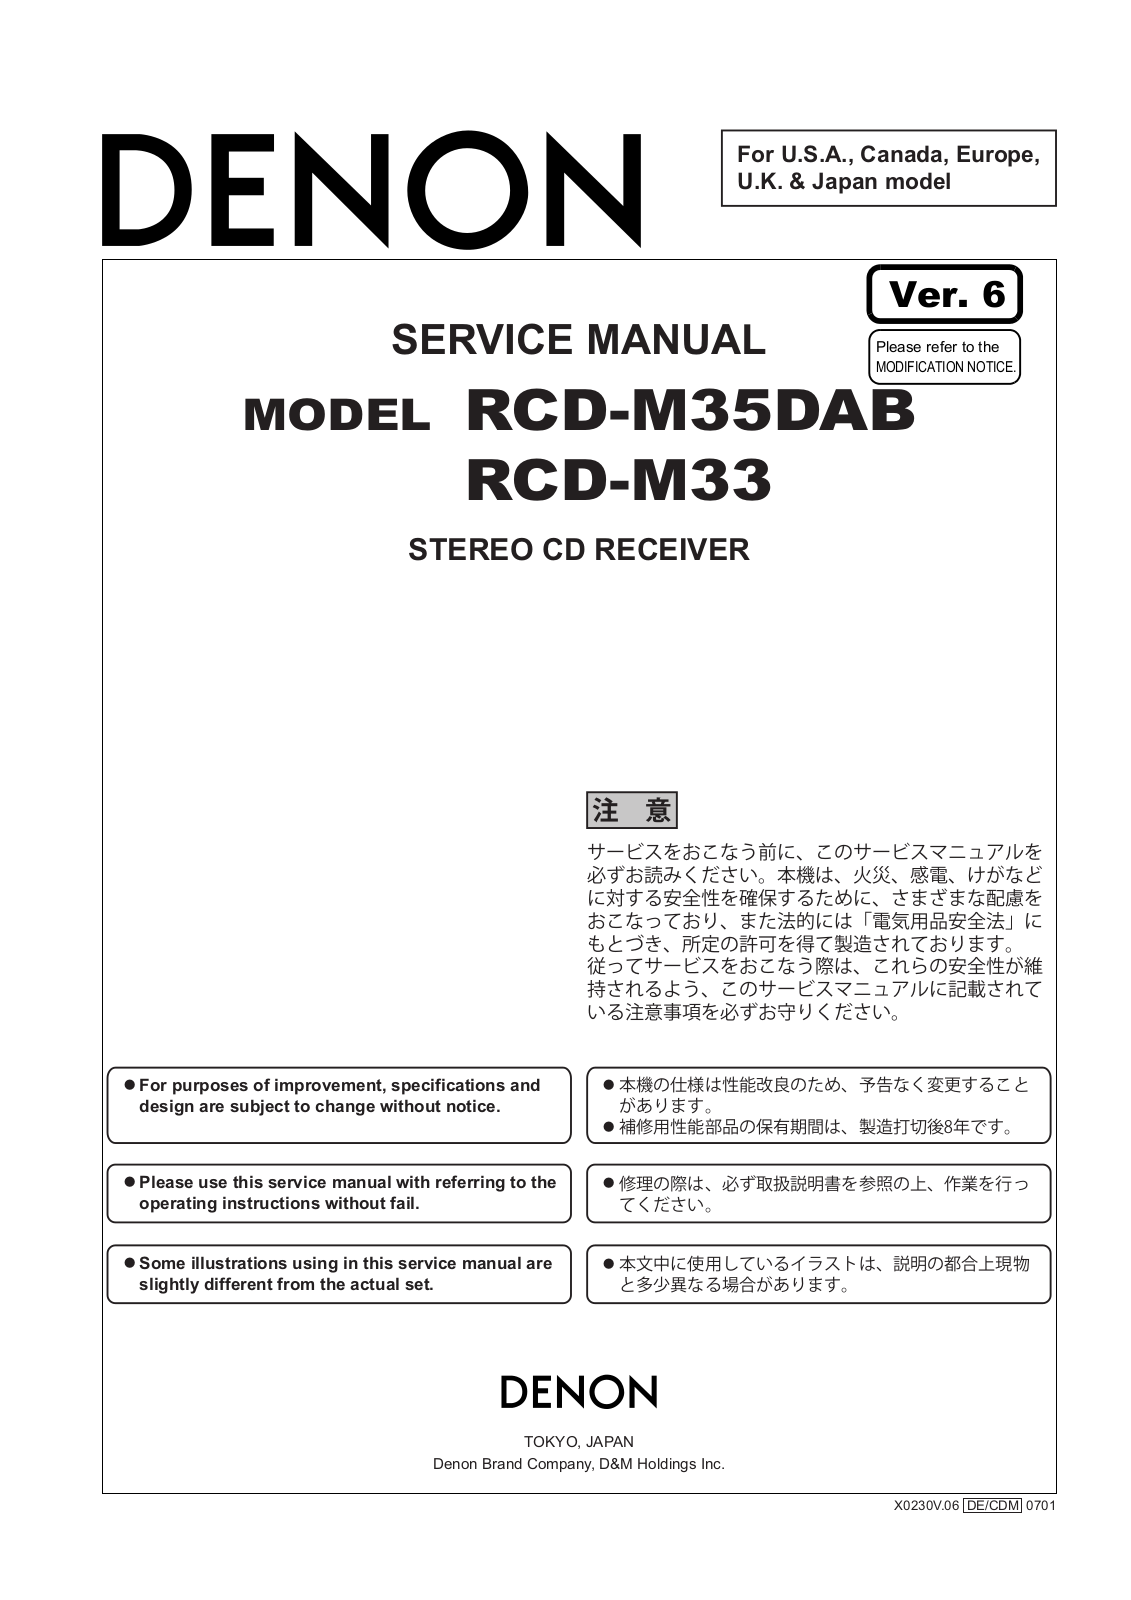 Denon RCD-M35DAB Service Manual